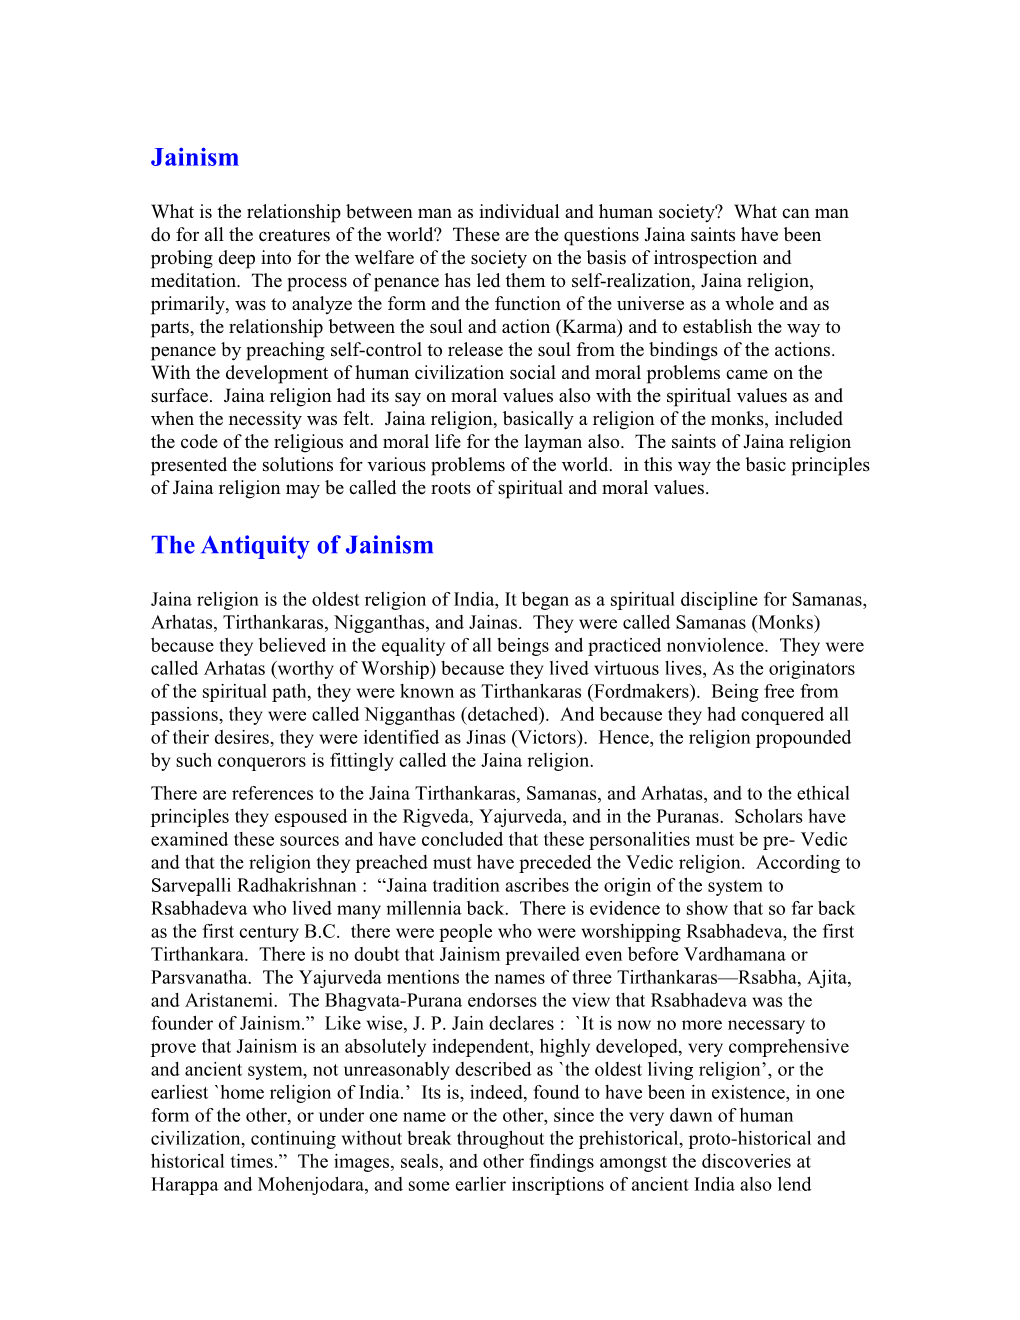 The Antiquity of Jainism